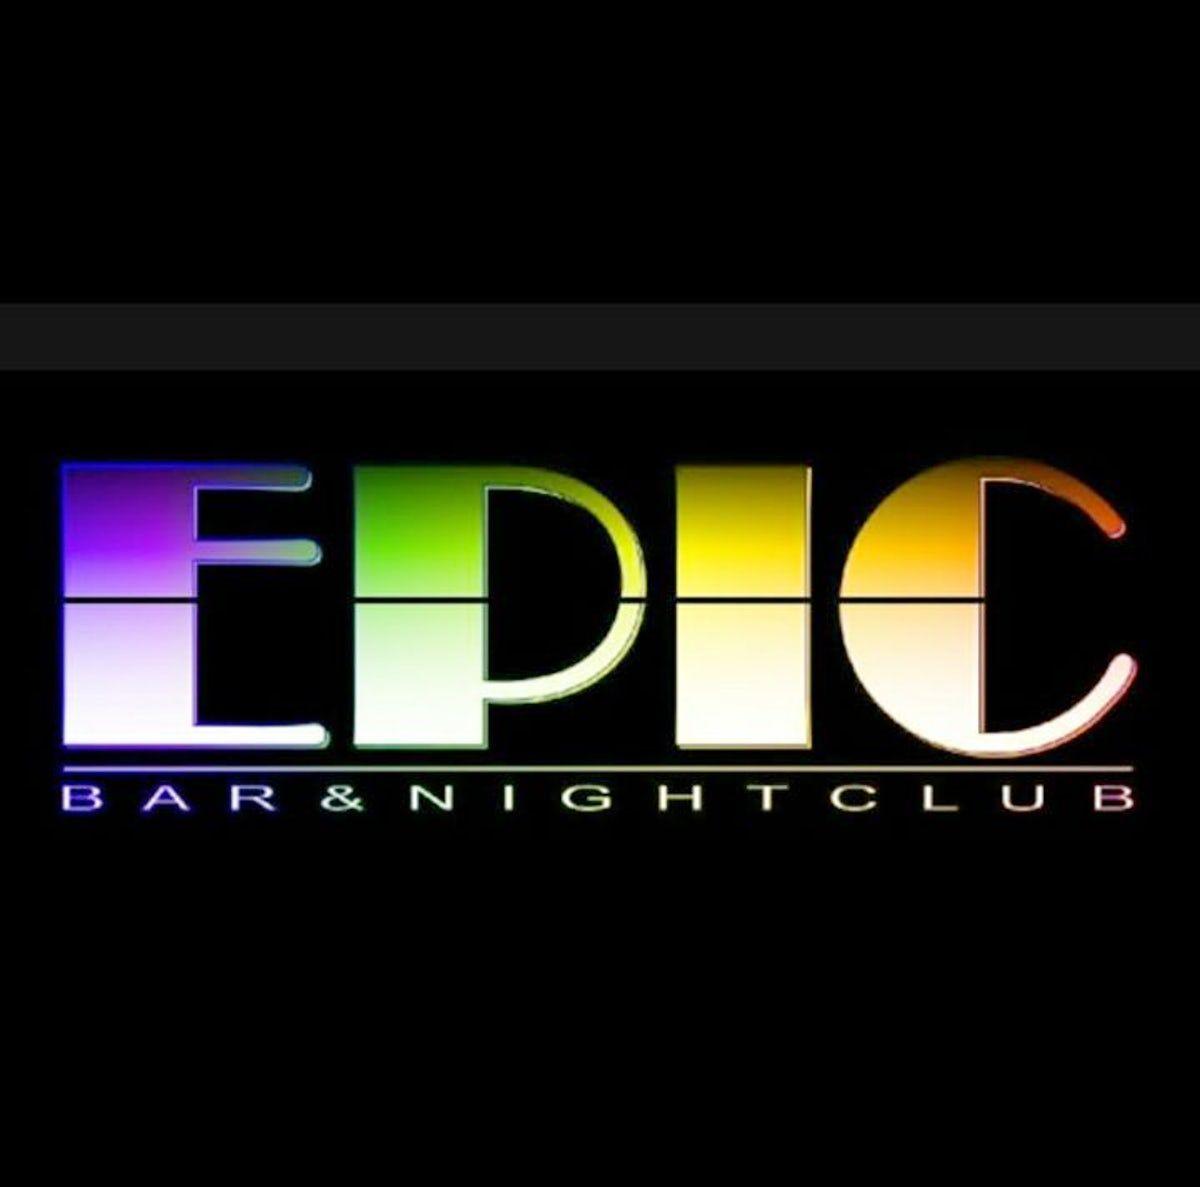 Epic Night Club Logo - Visit Epic Bar & Nightclub